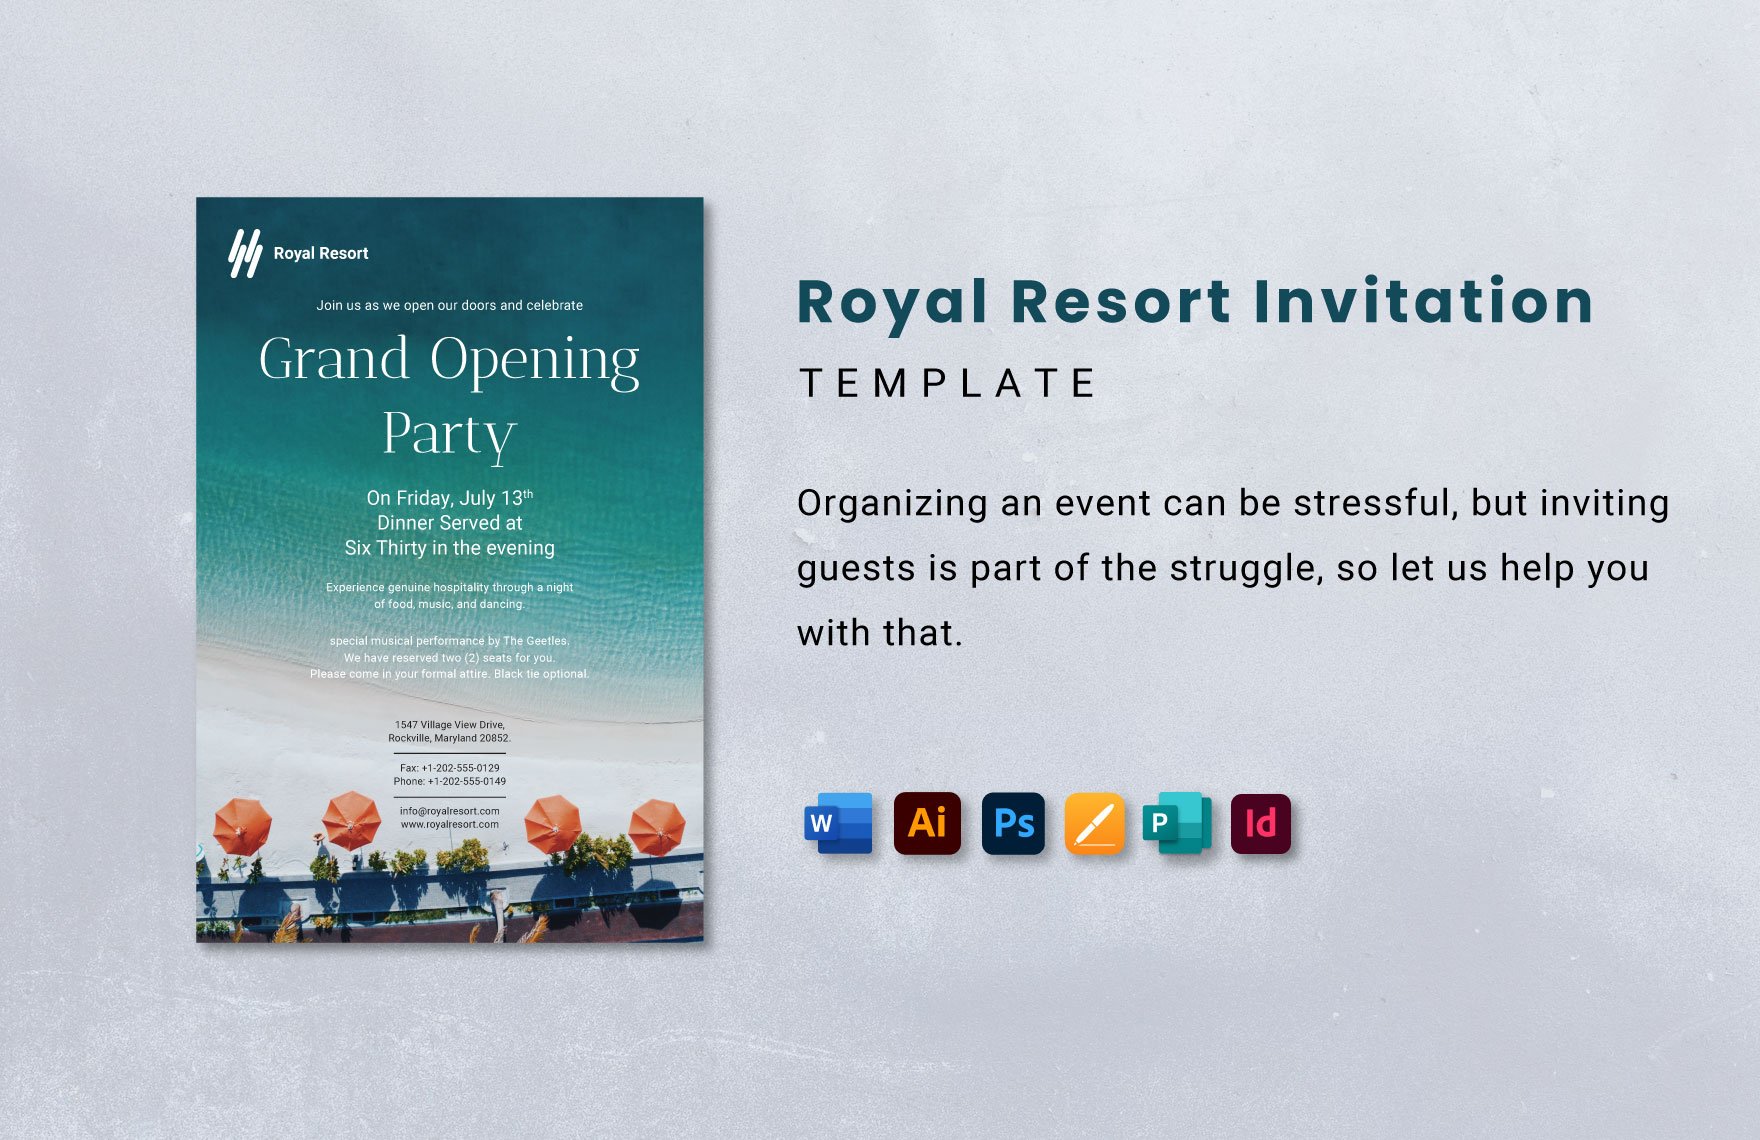 Royal Resort Invitation Template